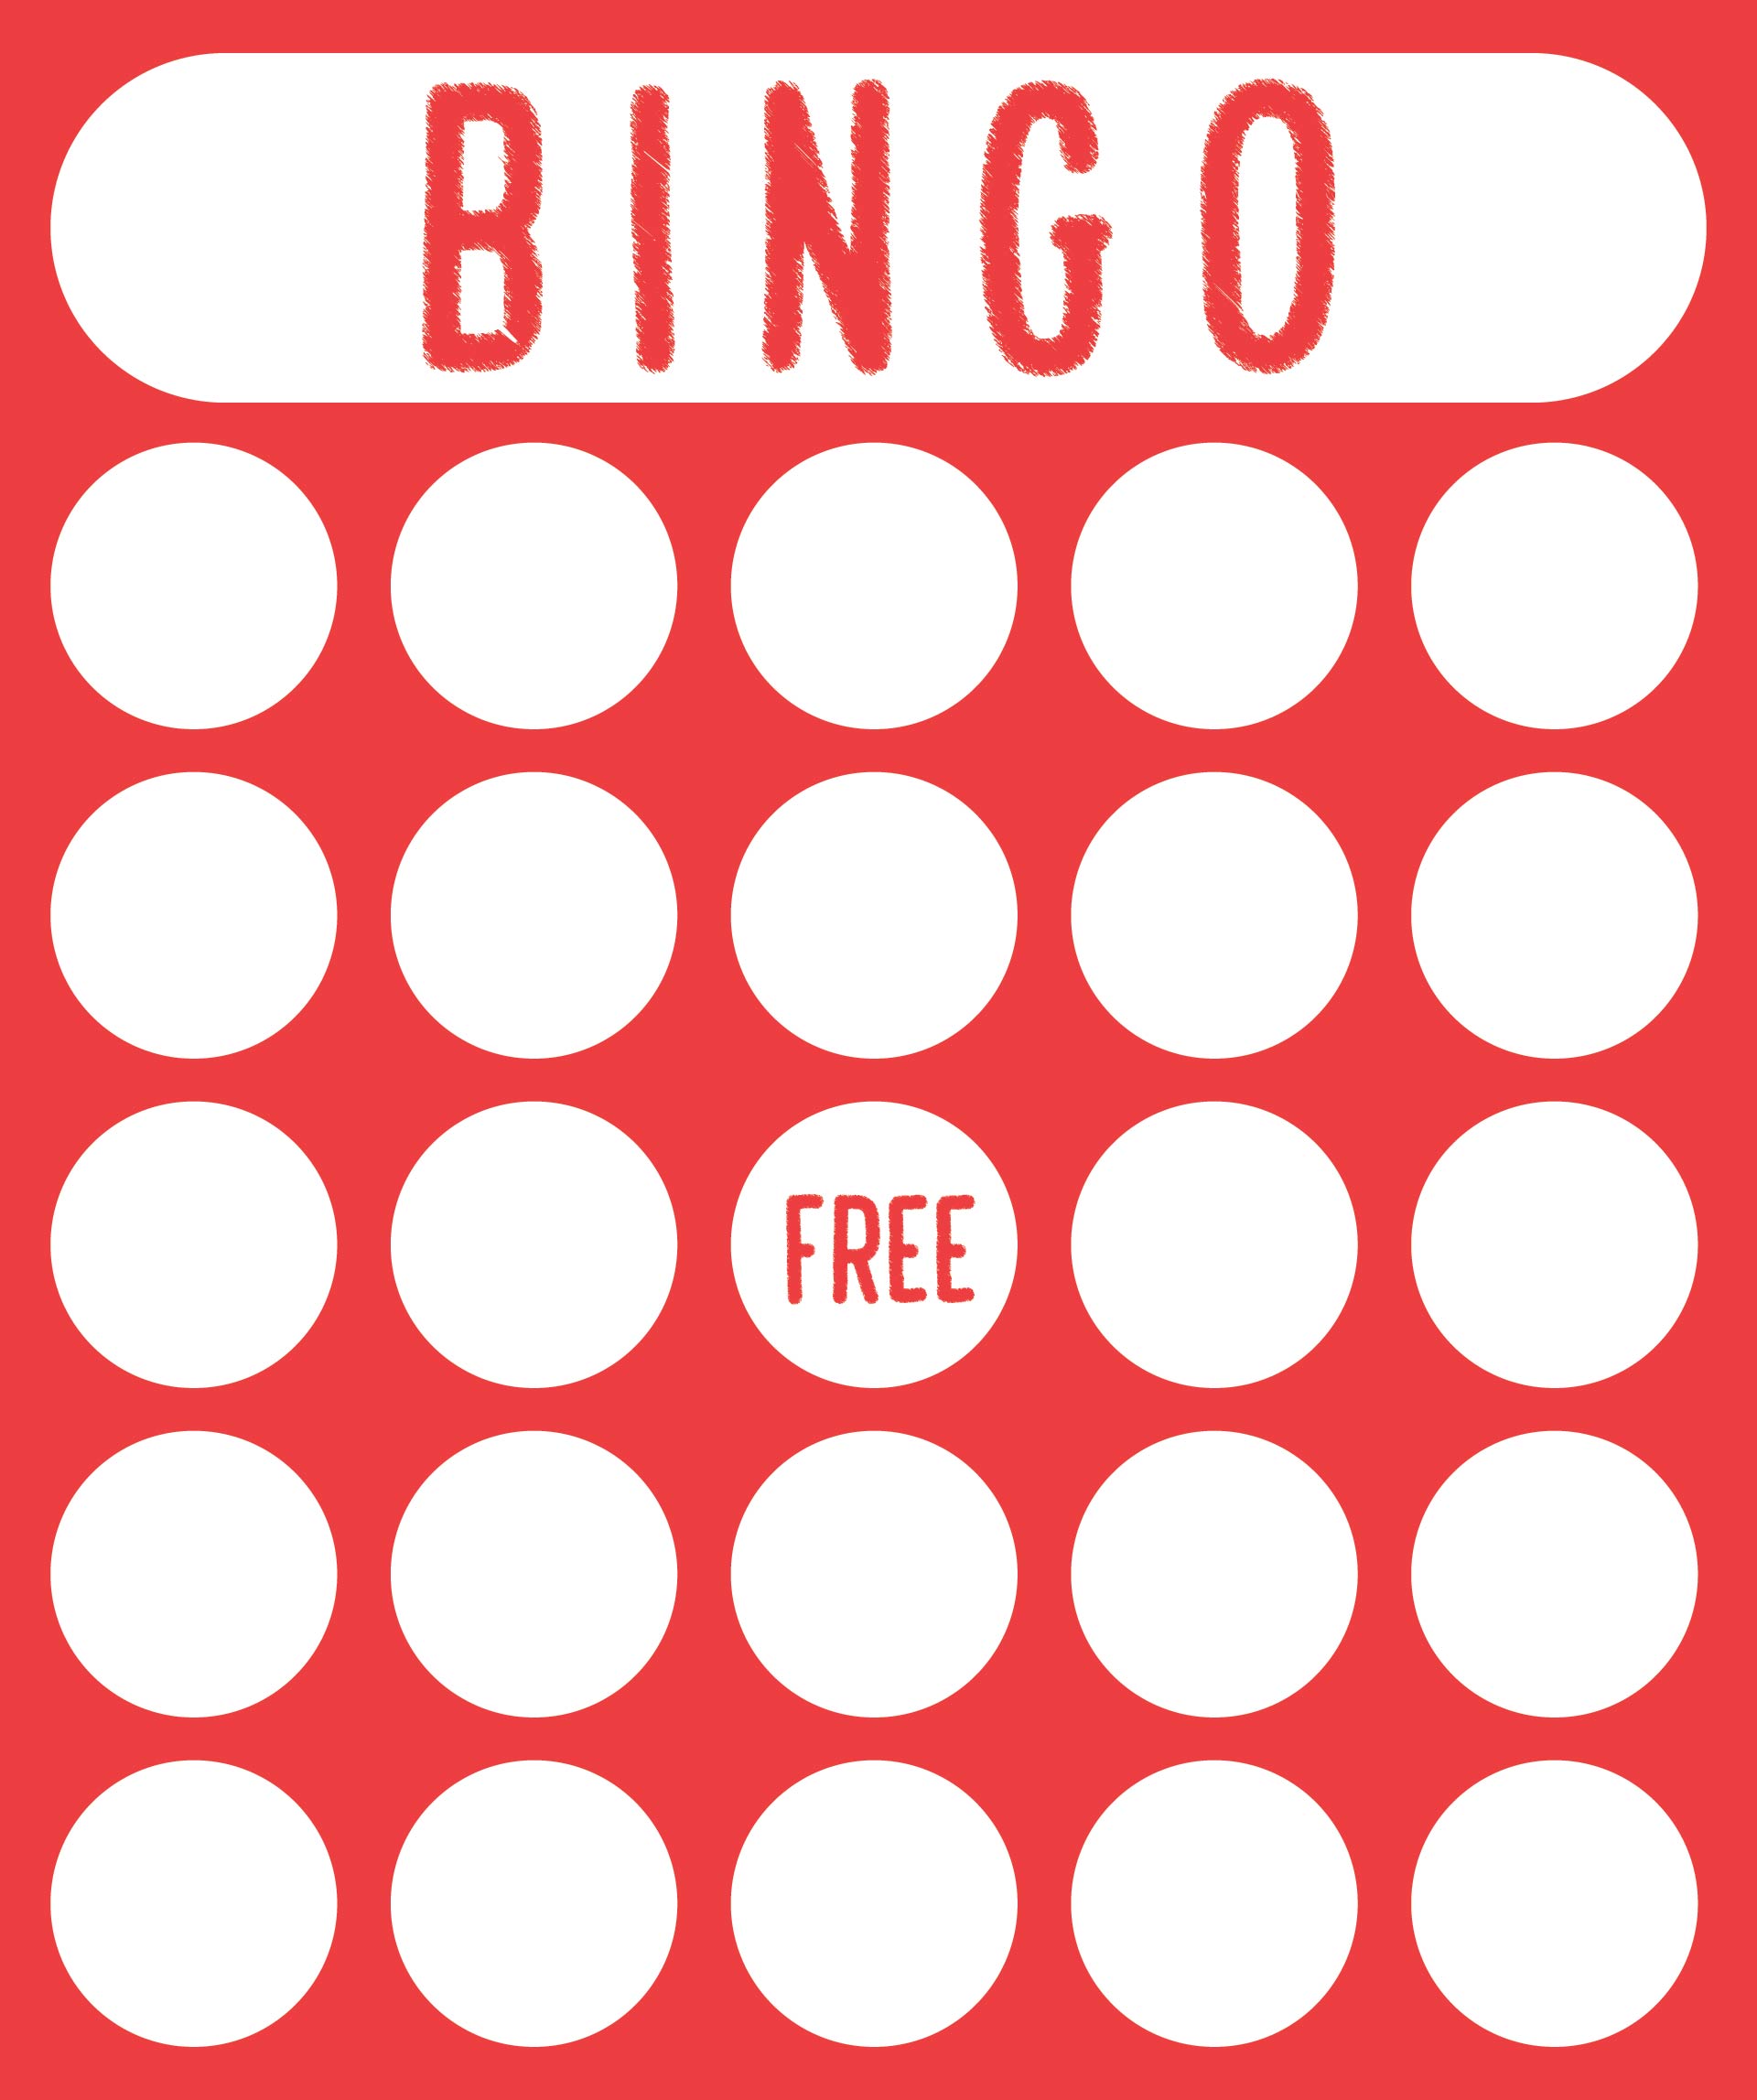 bingo card template excel